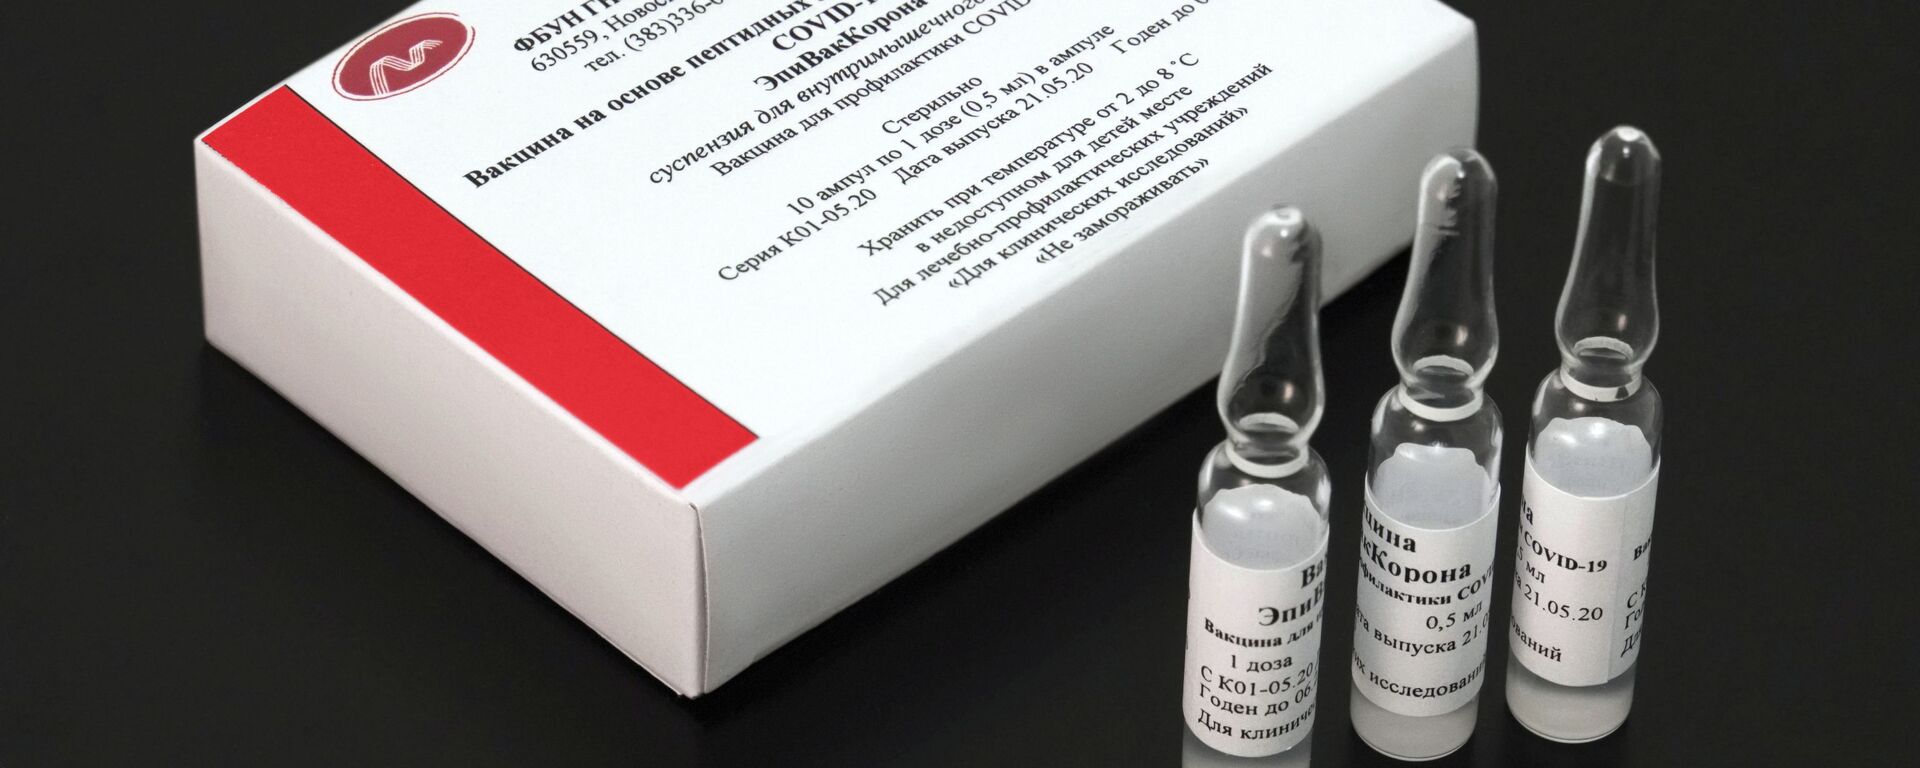 La vacuna anti-COVID-19 'EpiVacCorona' - Sputnik Mundo, 1920, 06.07.2021